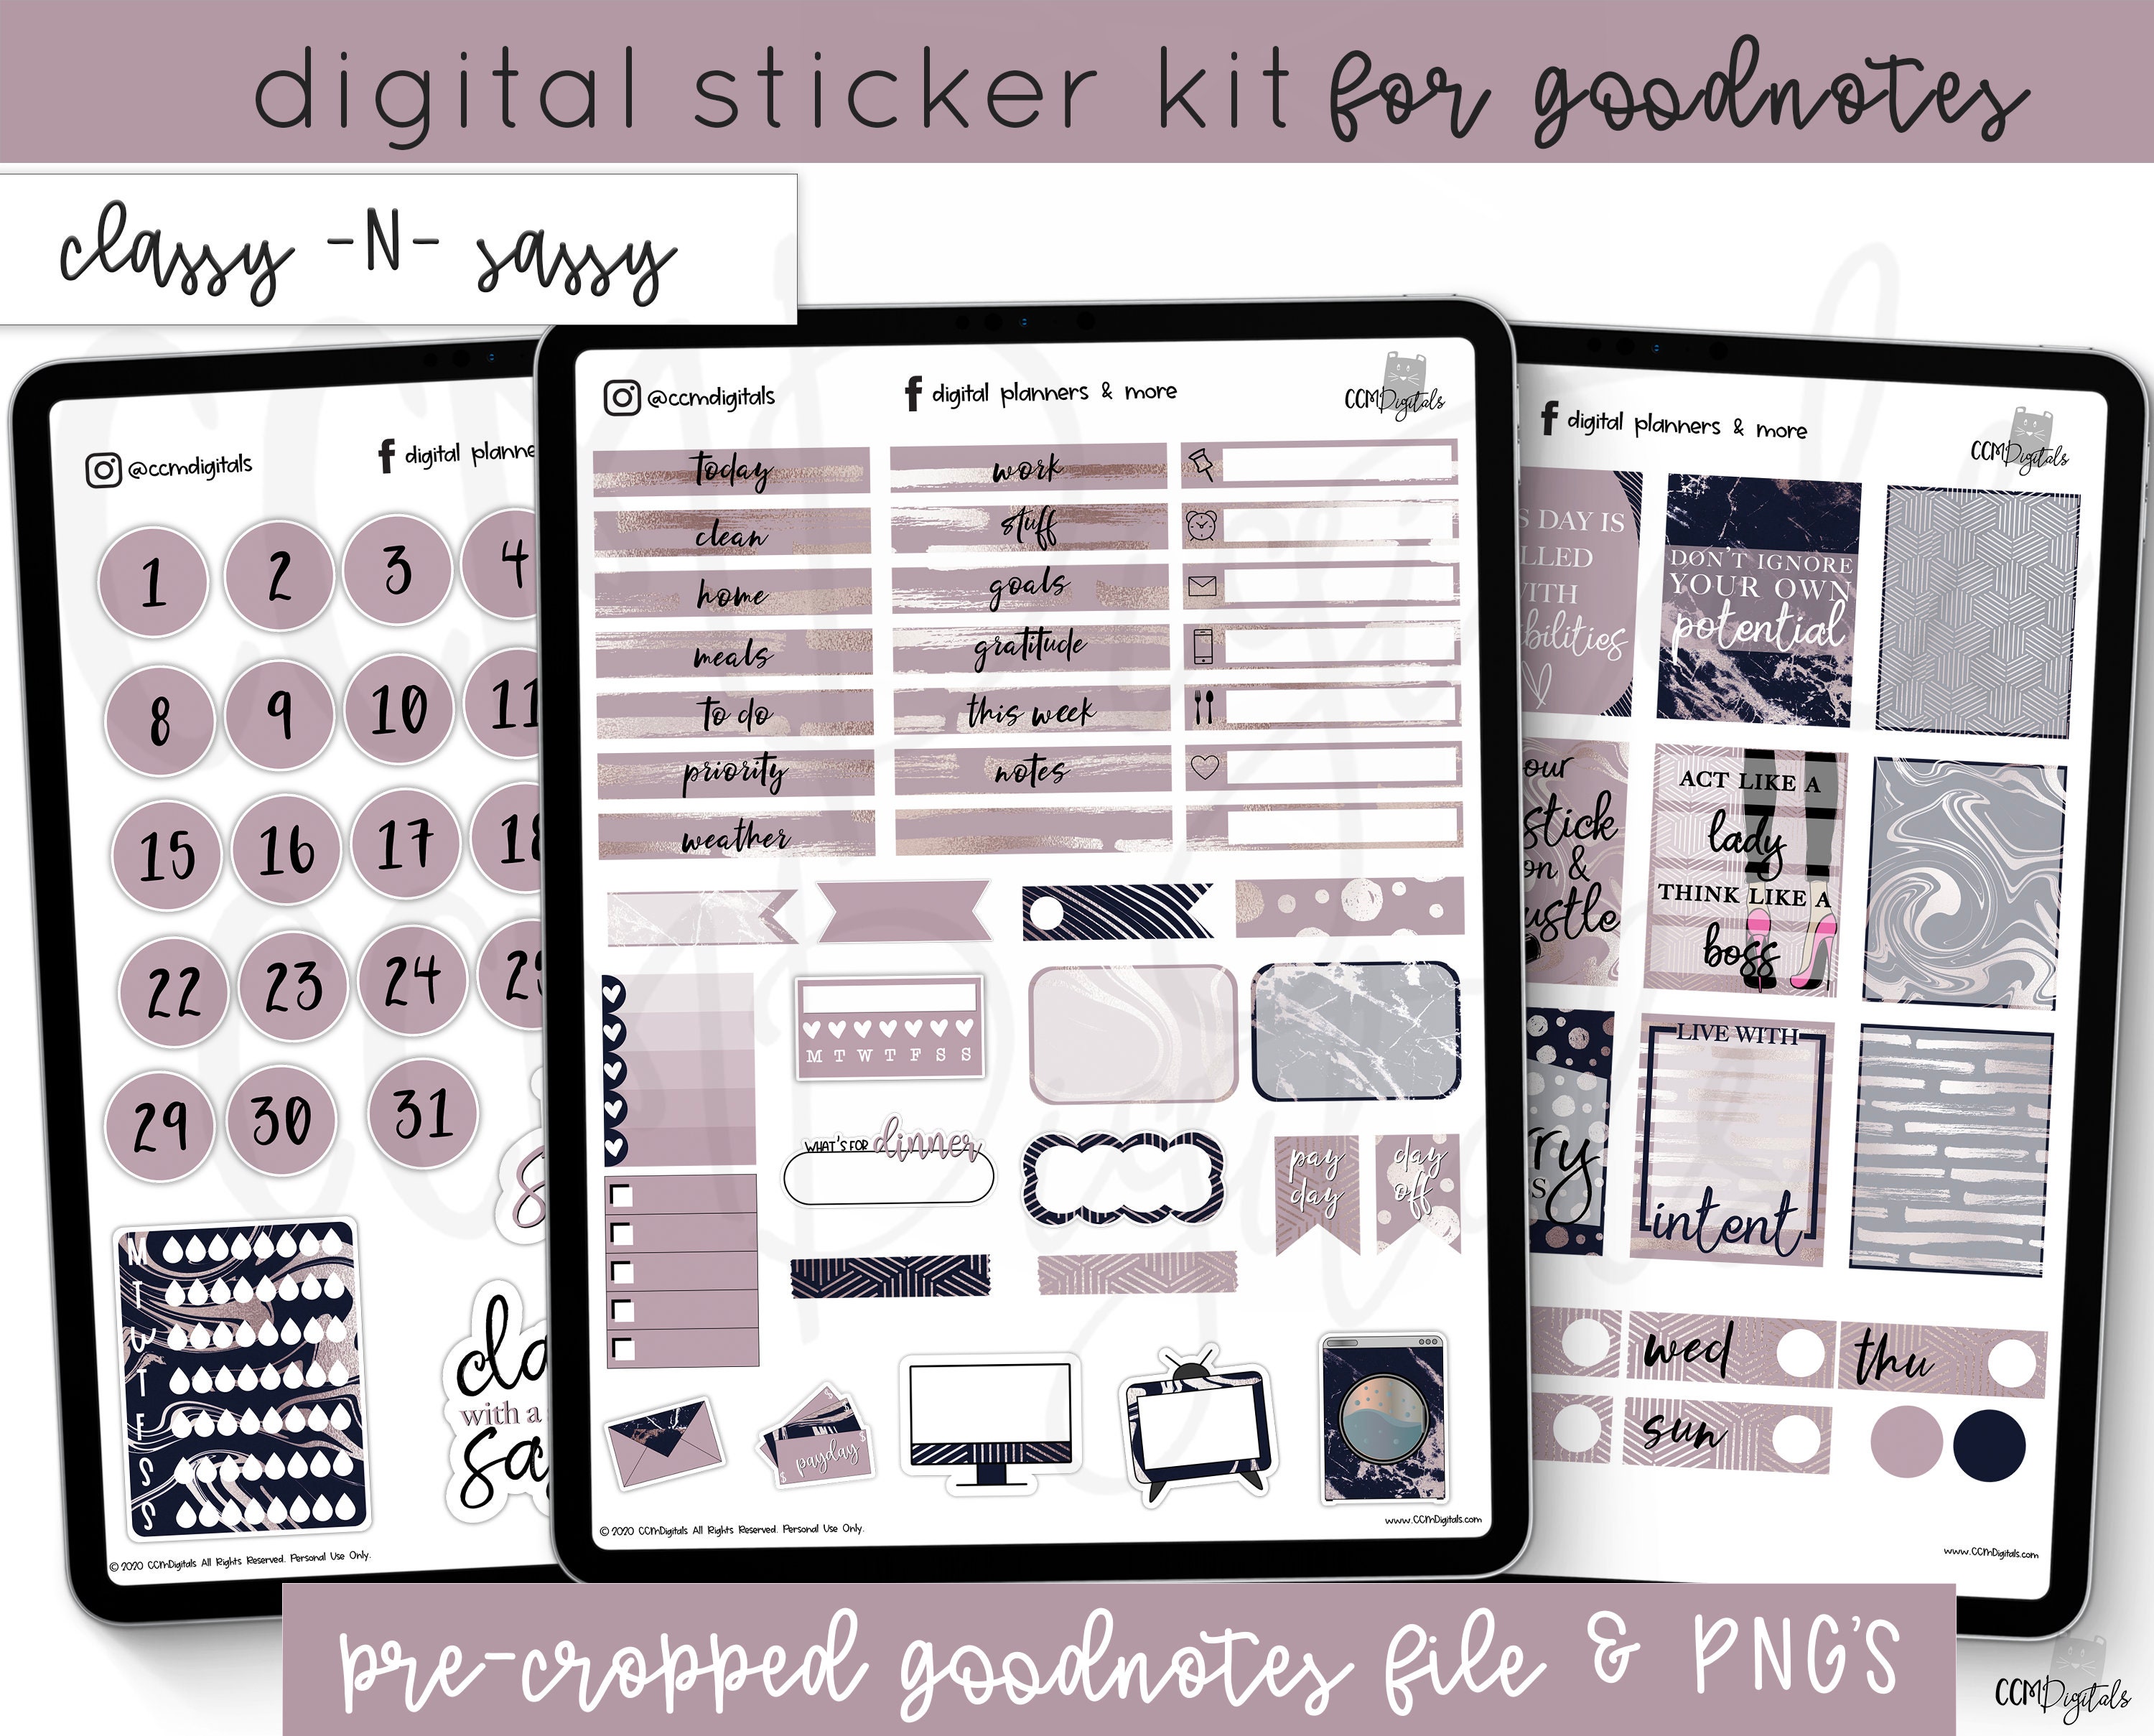 Digital Classy N Sassy Planner Girl Boss Stickers Goodnotes | Etsy